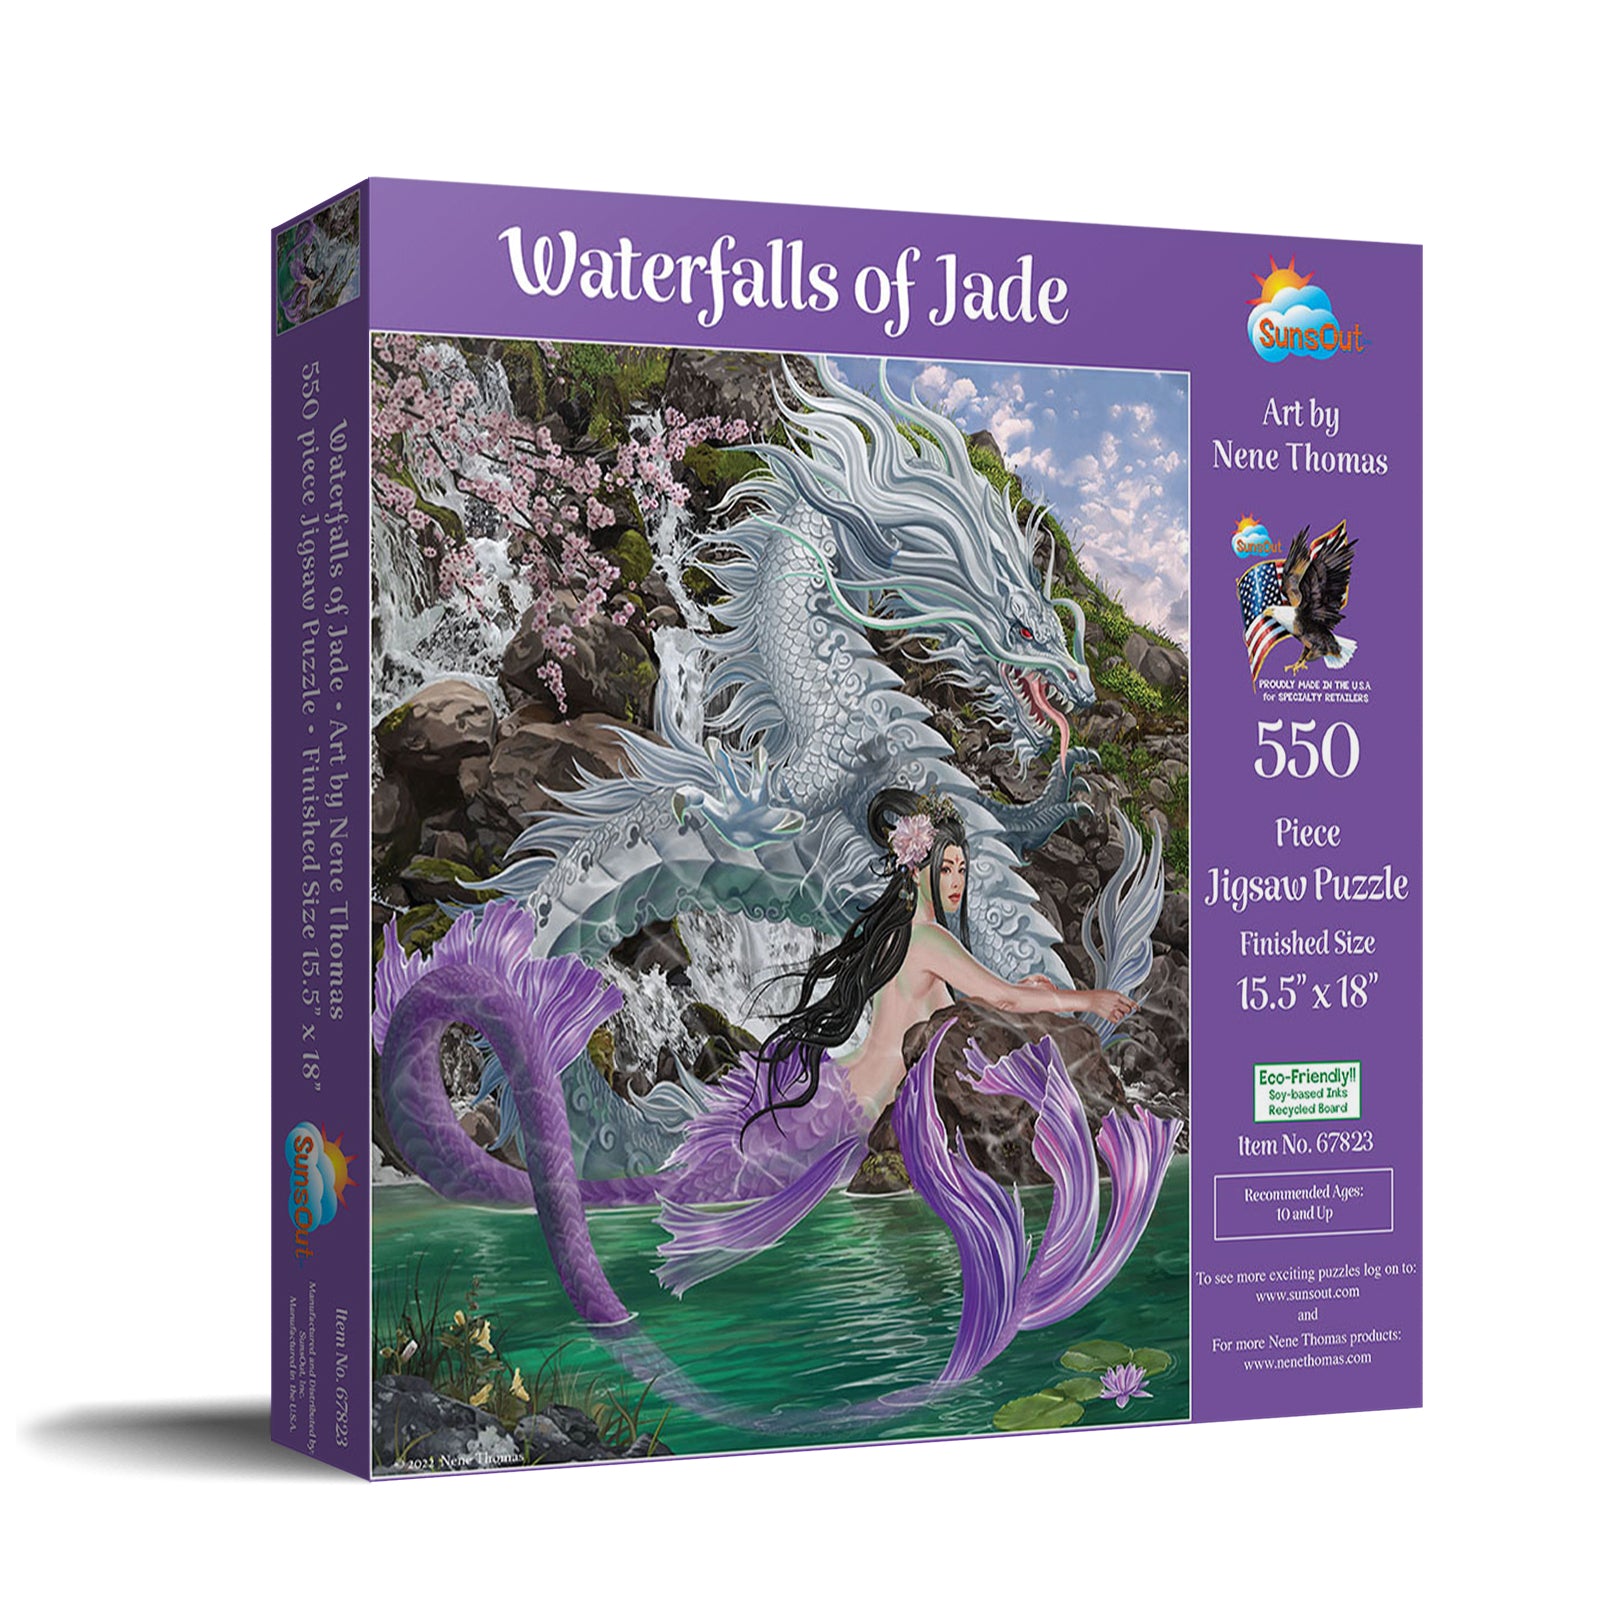 Waterfalls of Jade by Nene Thomas 550 Piece Jigsaw Puzzle